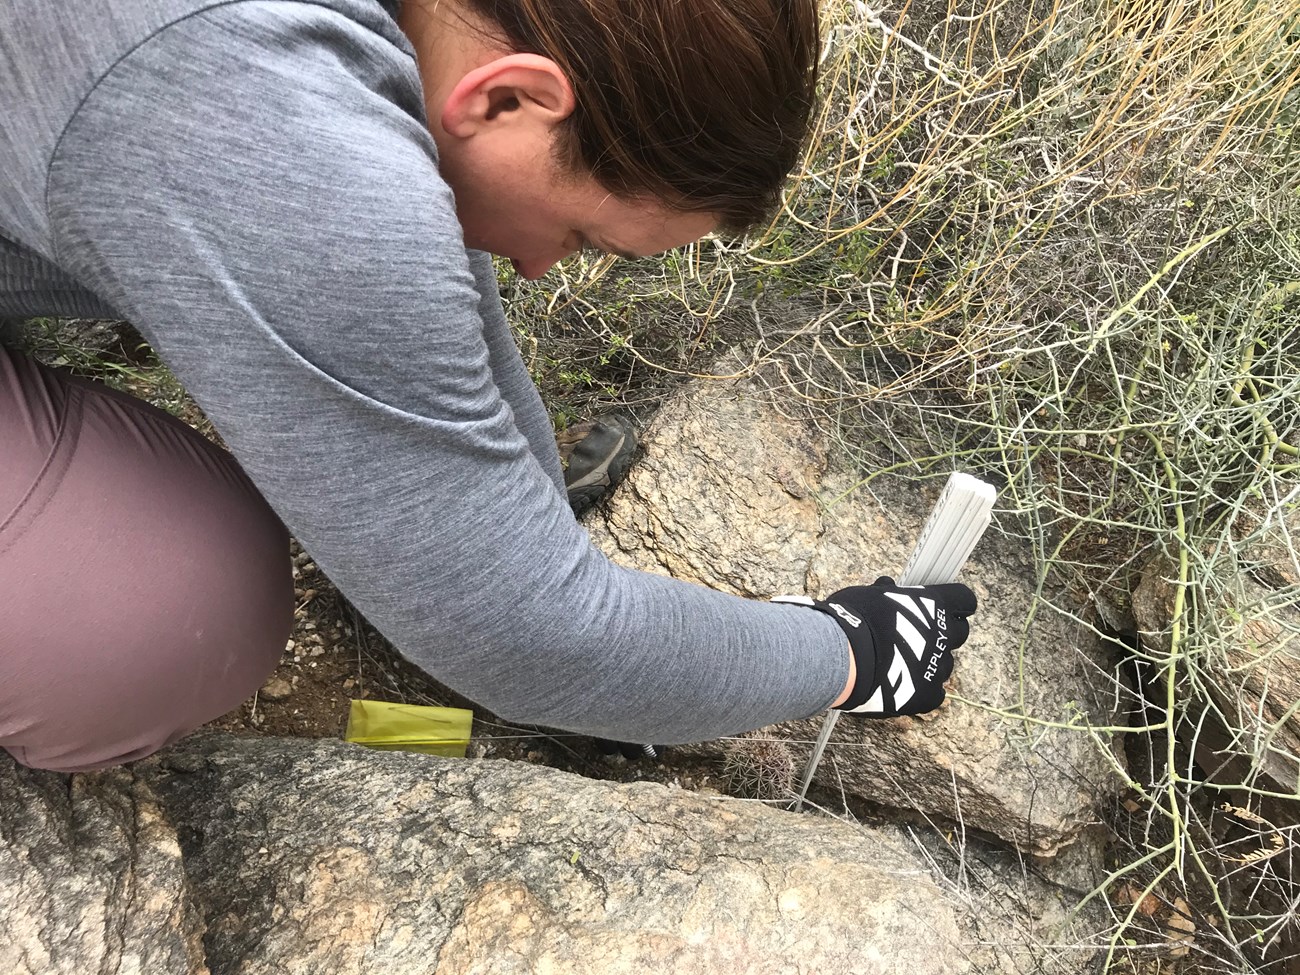 Adventure scientist measures tiny saguaro